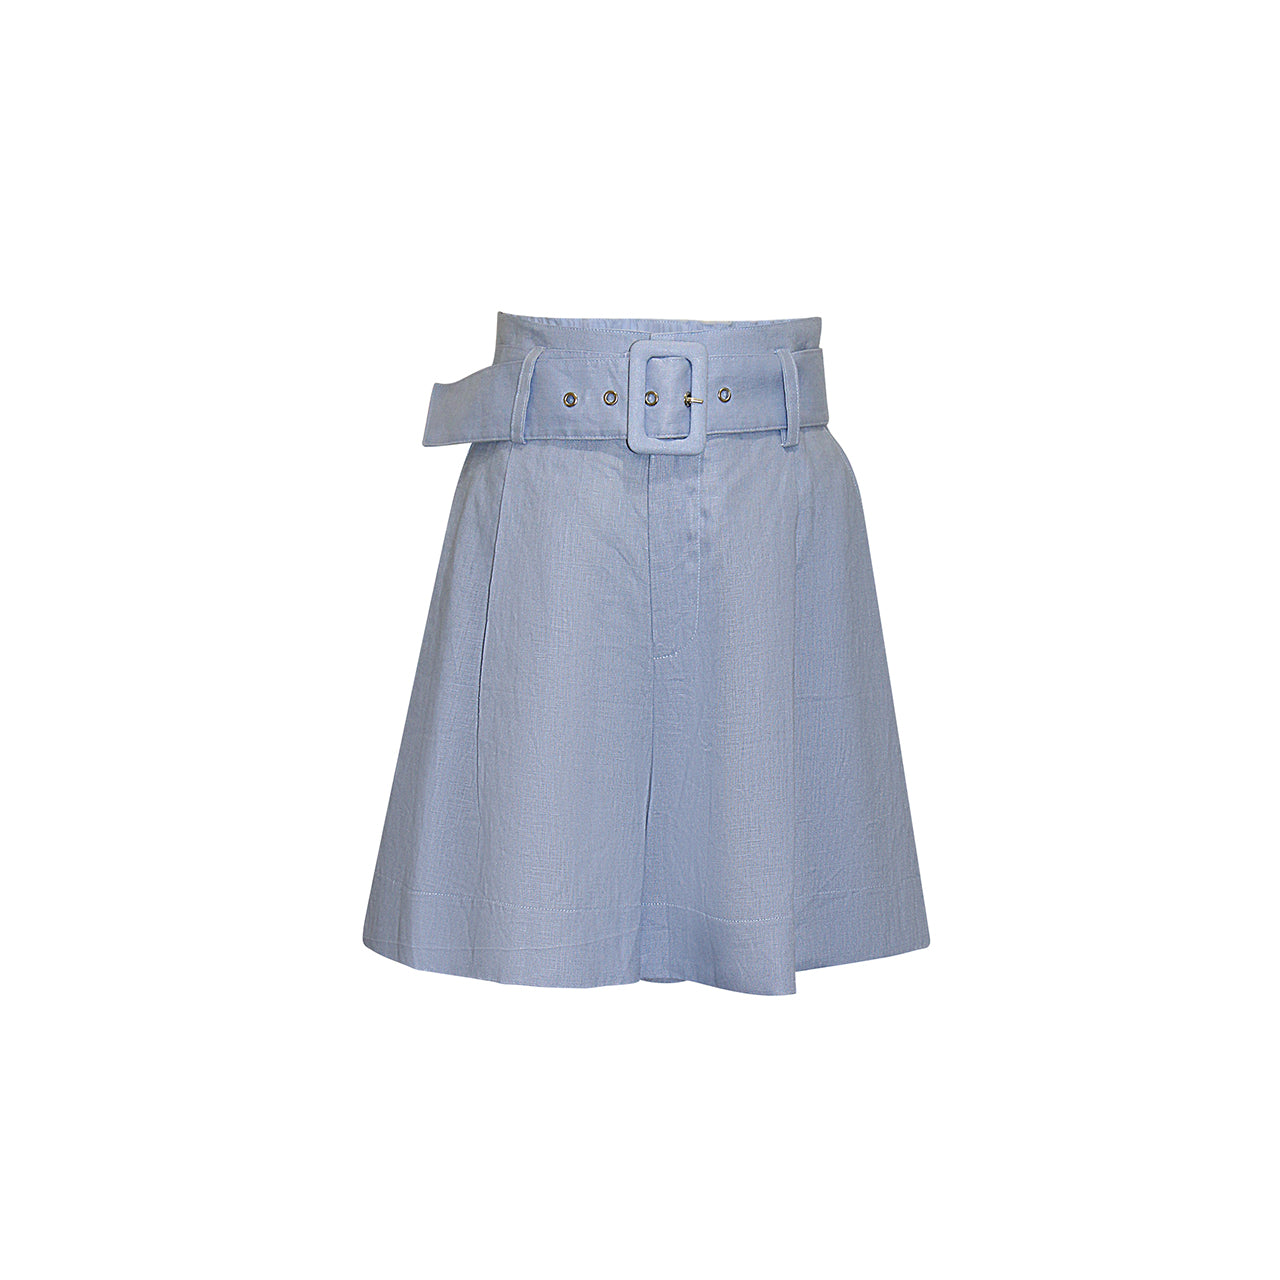 NOVA Linen Shorts in Baby Blue by Gosia Orlowska